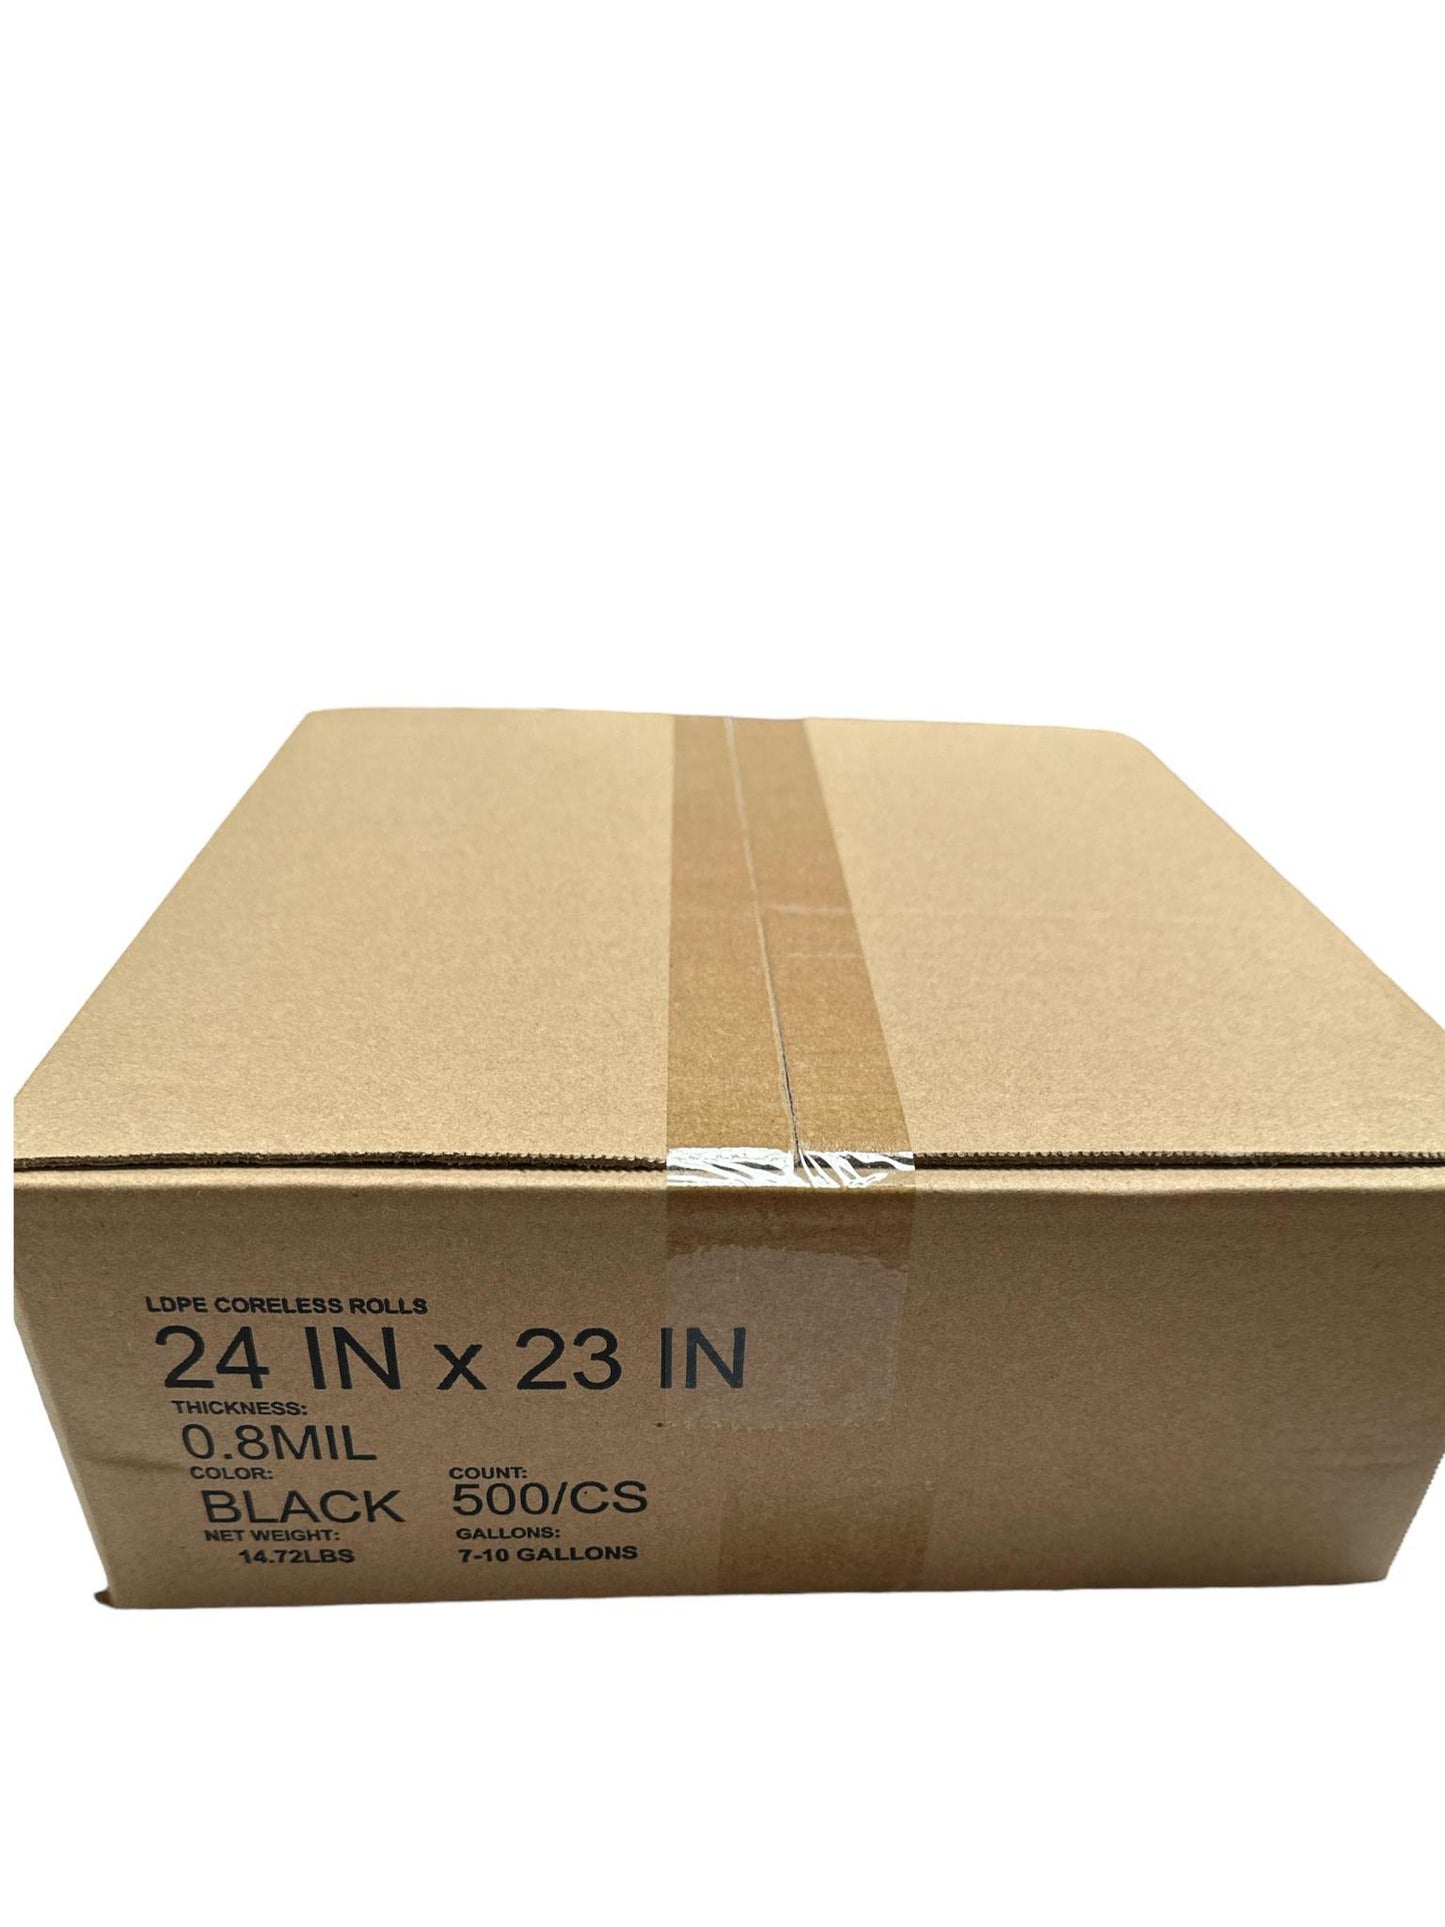 24x23 0.8 Mil Black Liners Rolls 500/case